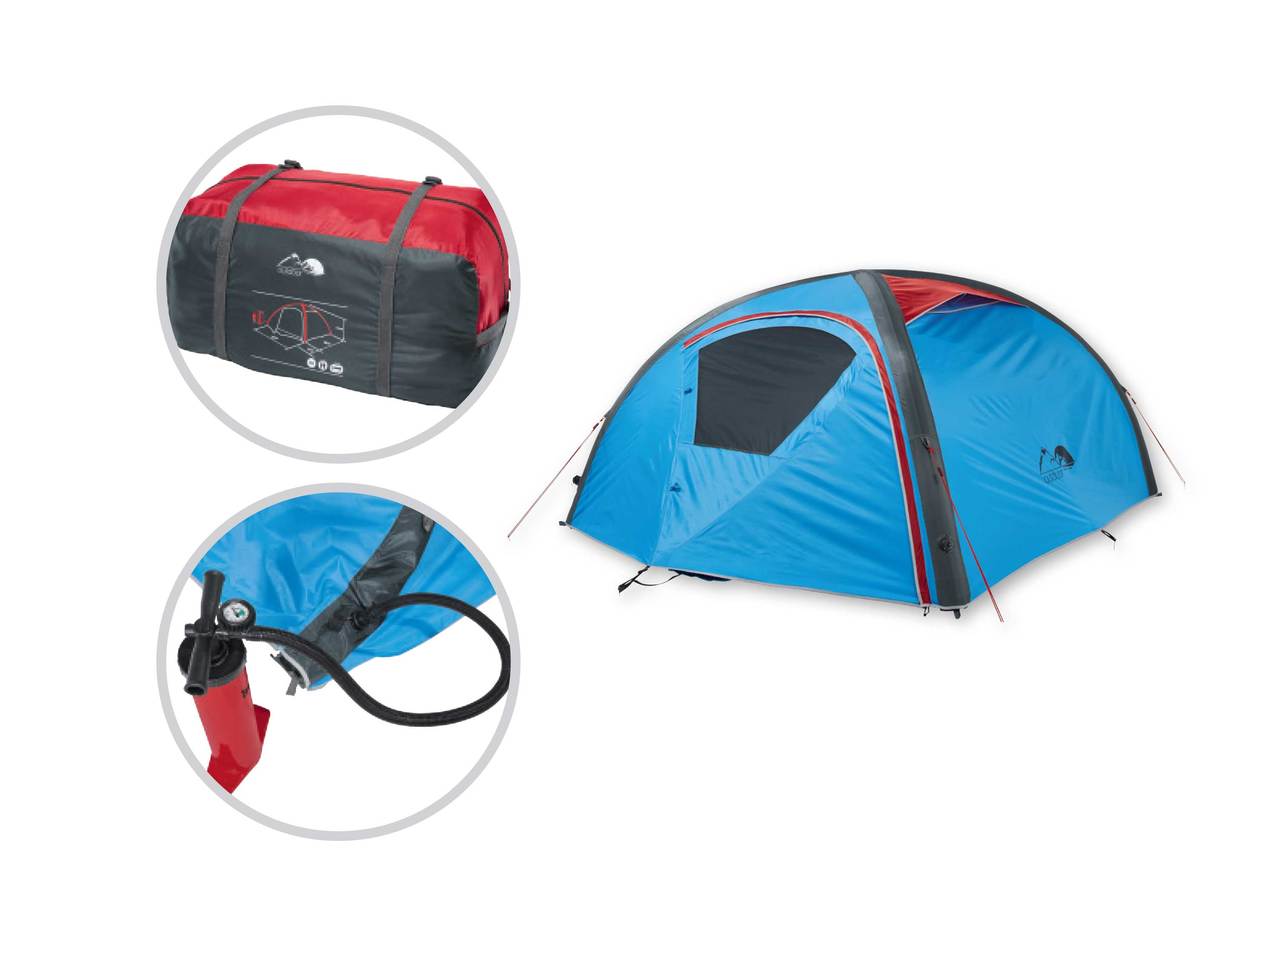 CRIVIT(R) 2-Man Inflatable Tent